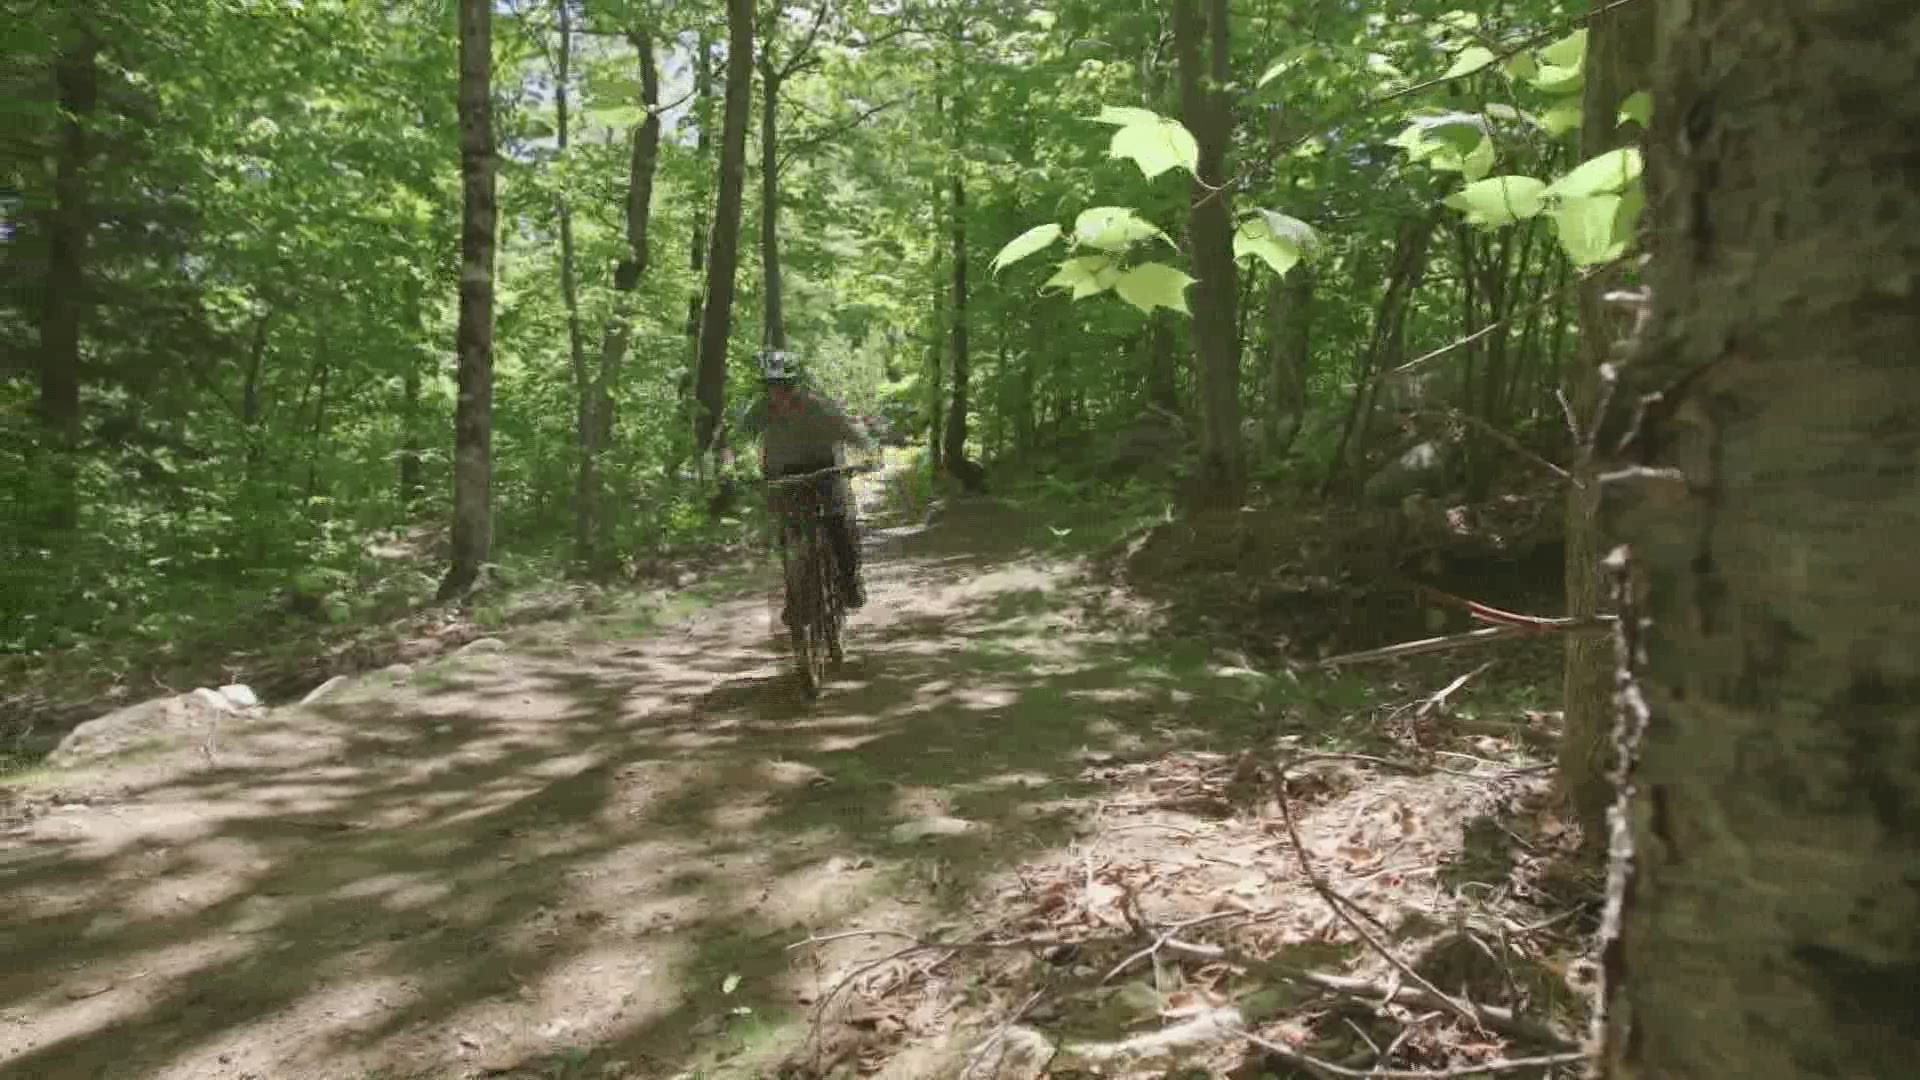 Mt. Abram to open bike trails